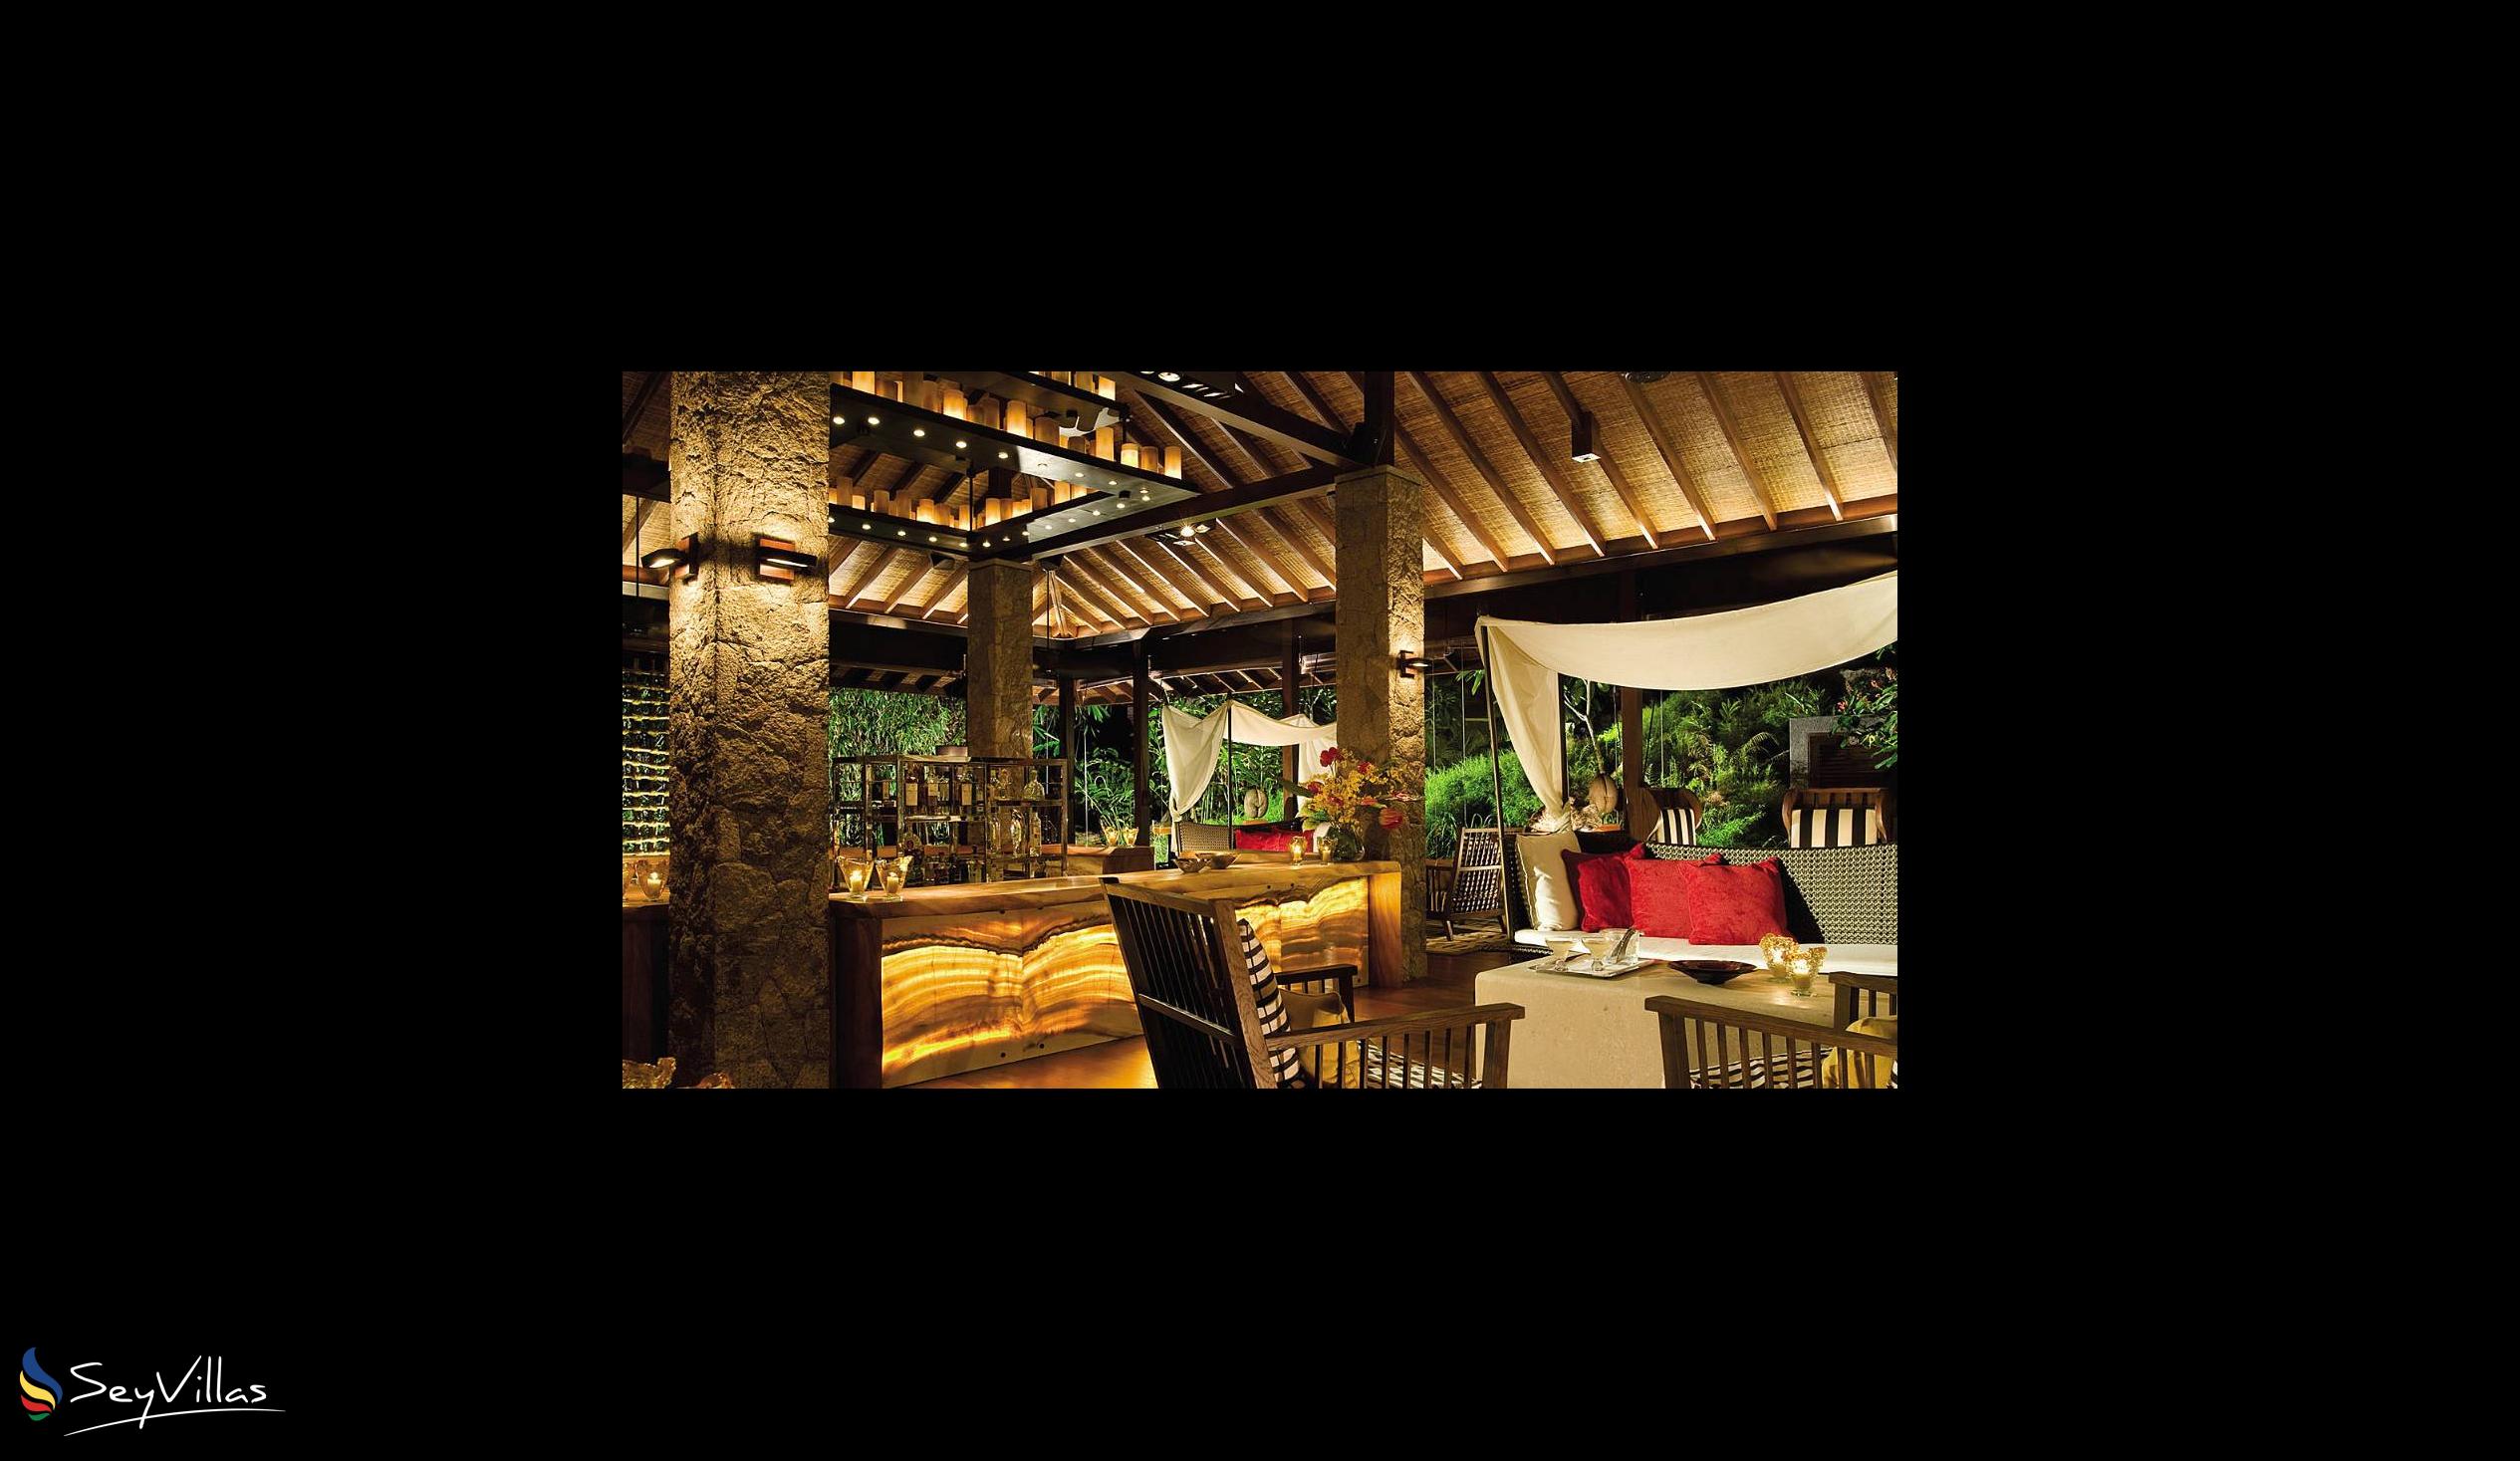 Photo 13: Four Seasons Resort - Indoor area - Mahé (Seychelles)